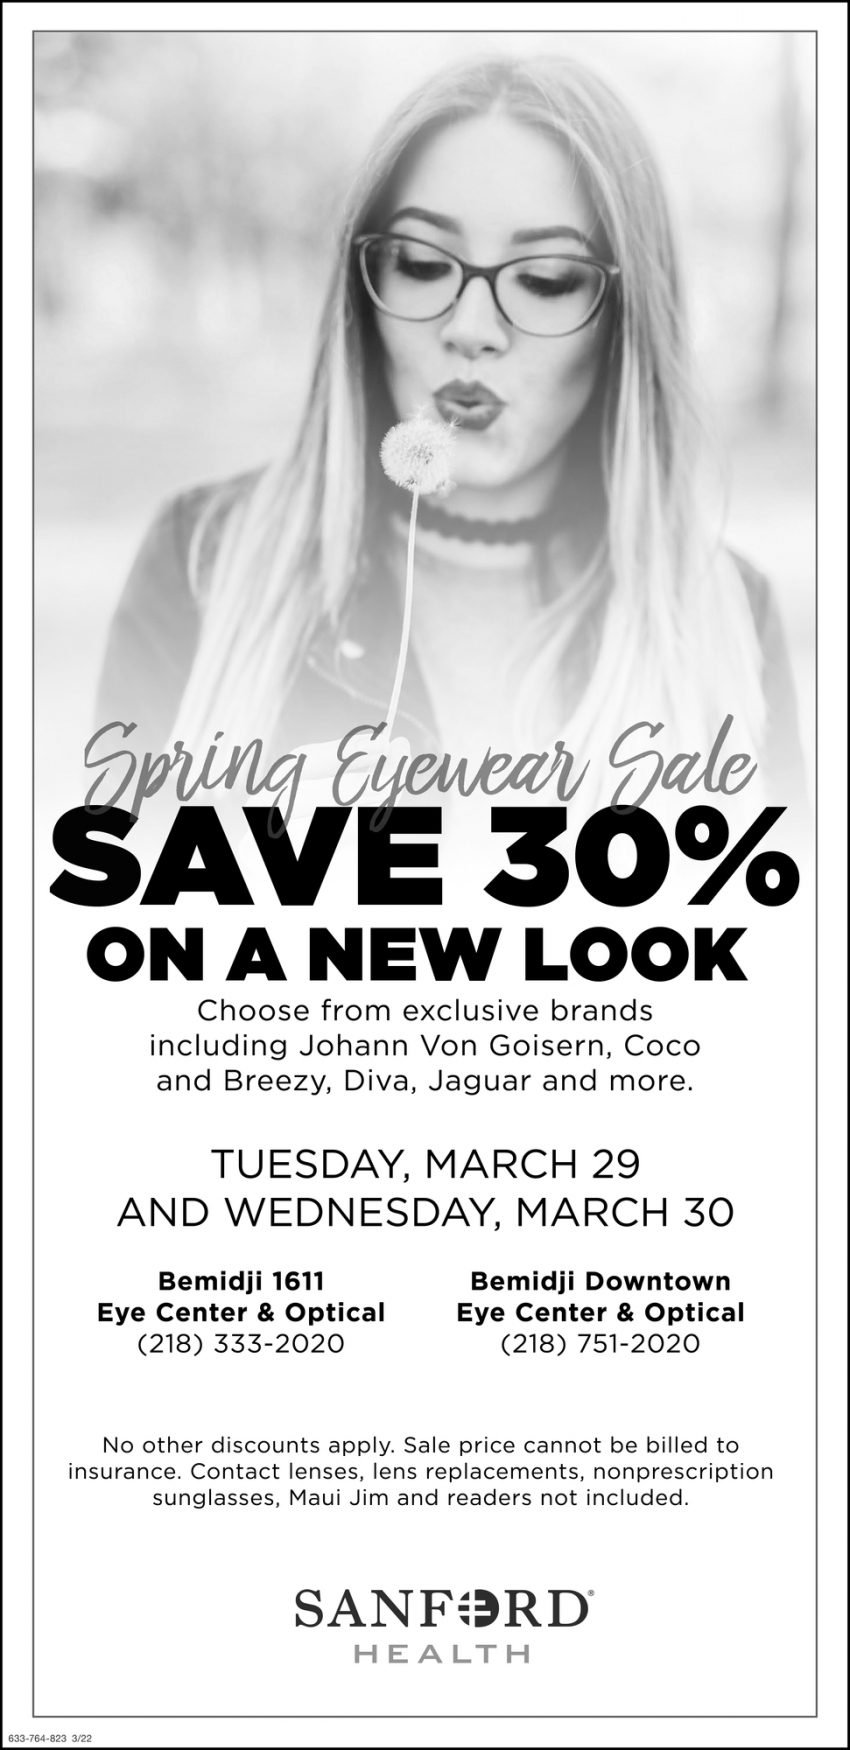 Spring Eyewear Sale Save 30% On A New Look